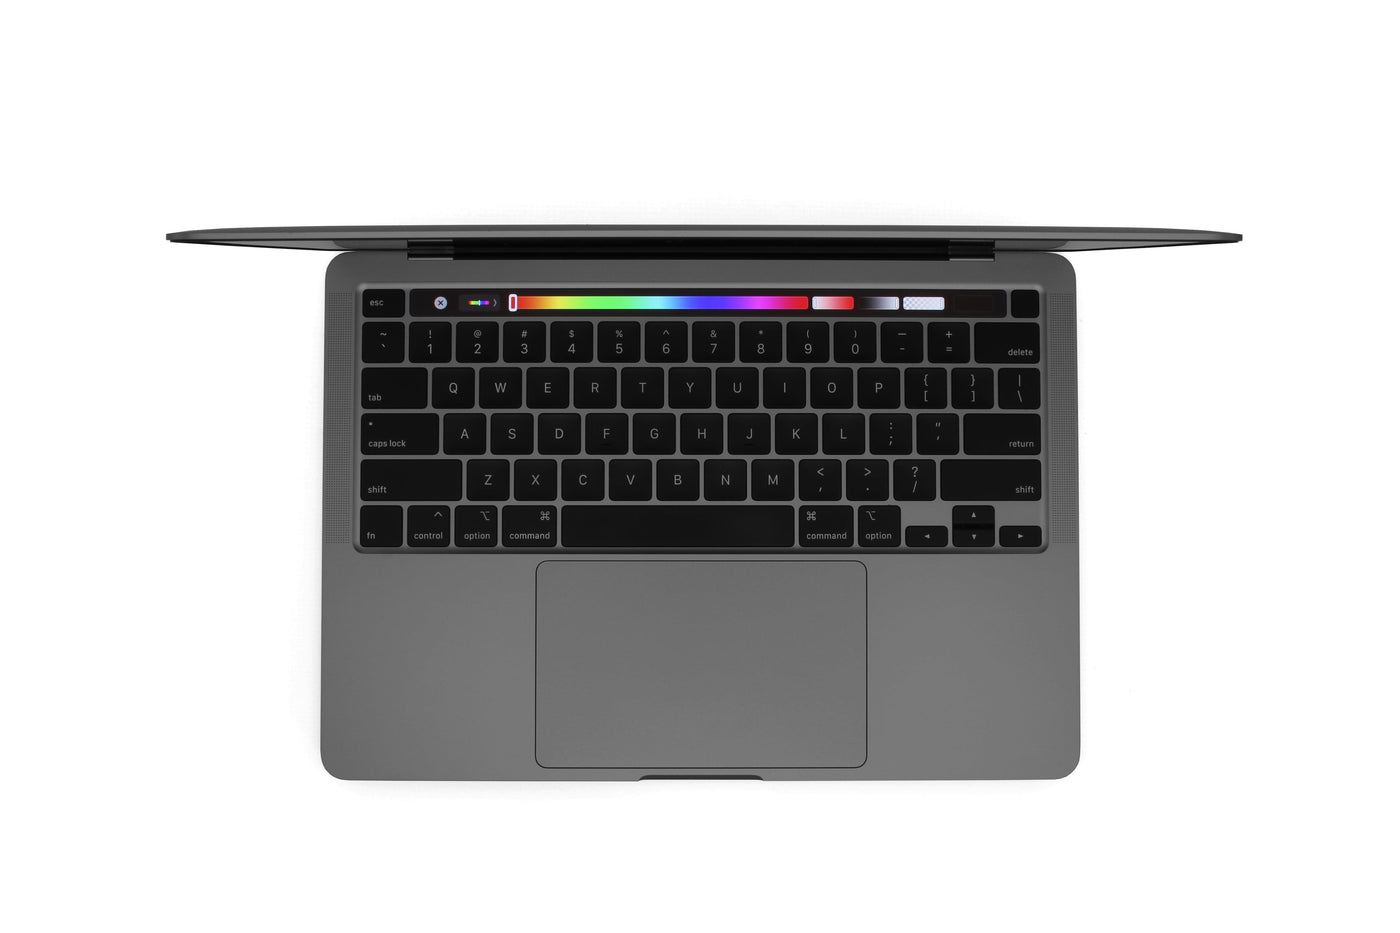 Apple MacBook Pro 13-inch MacBook Pro 13-inch M1 (Space Grey, 2020) - Fair